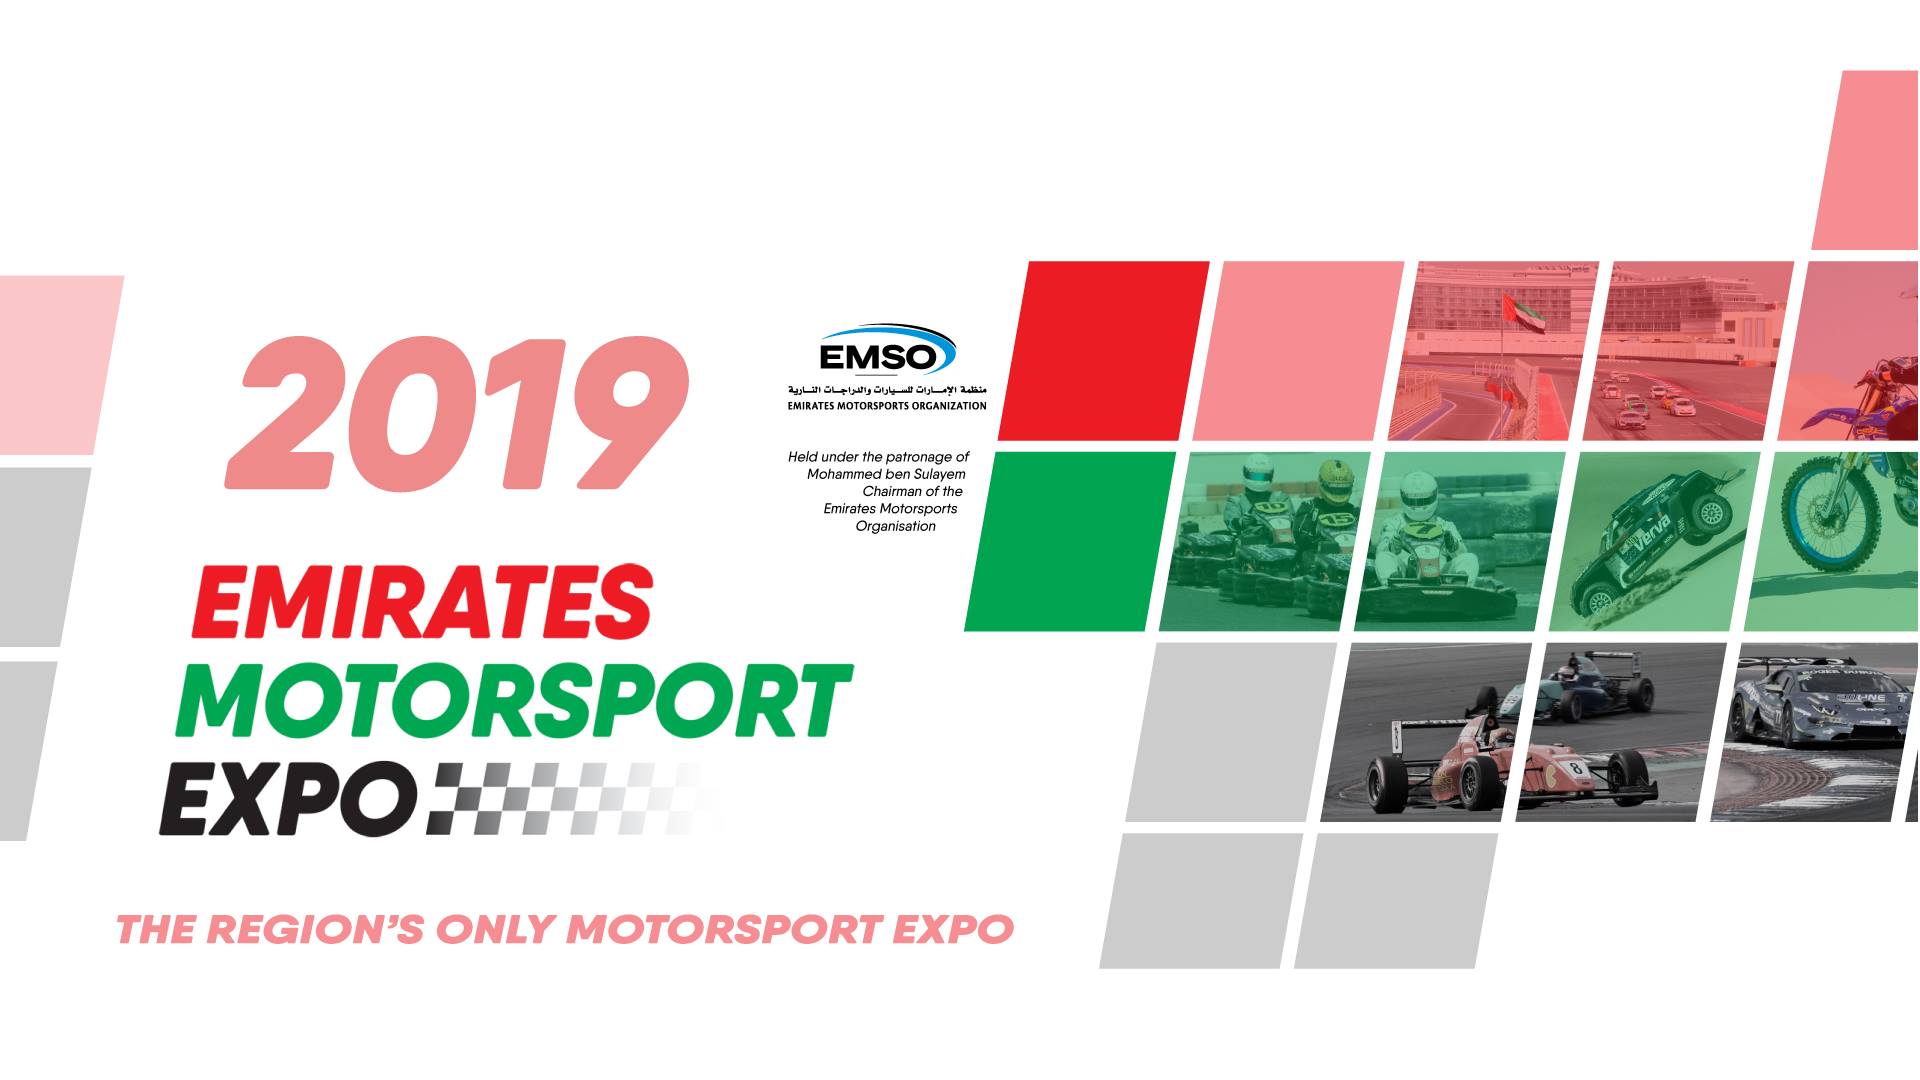 Emirates Motorsport Expo 2019 - Coming Soon in UAE